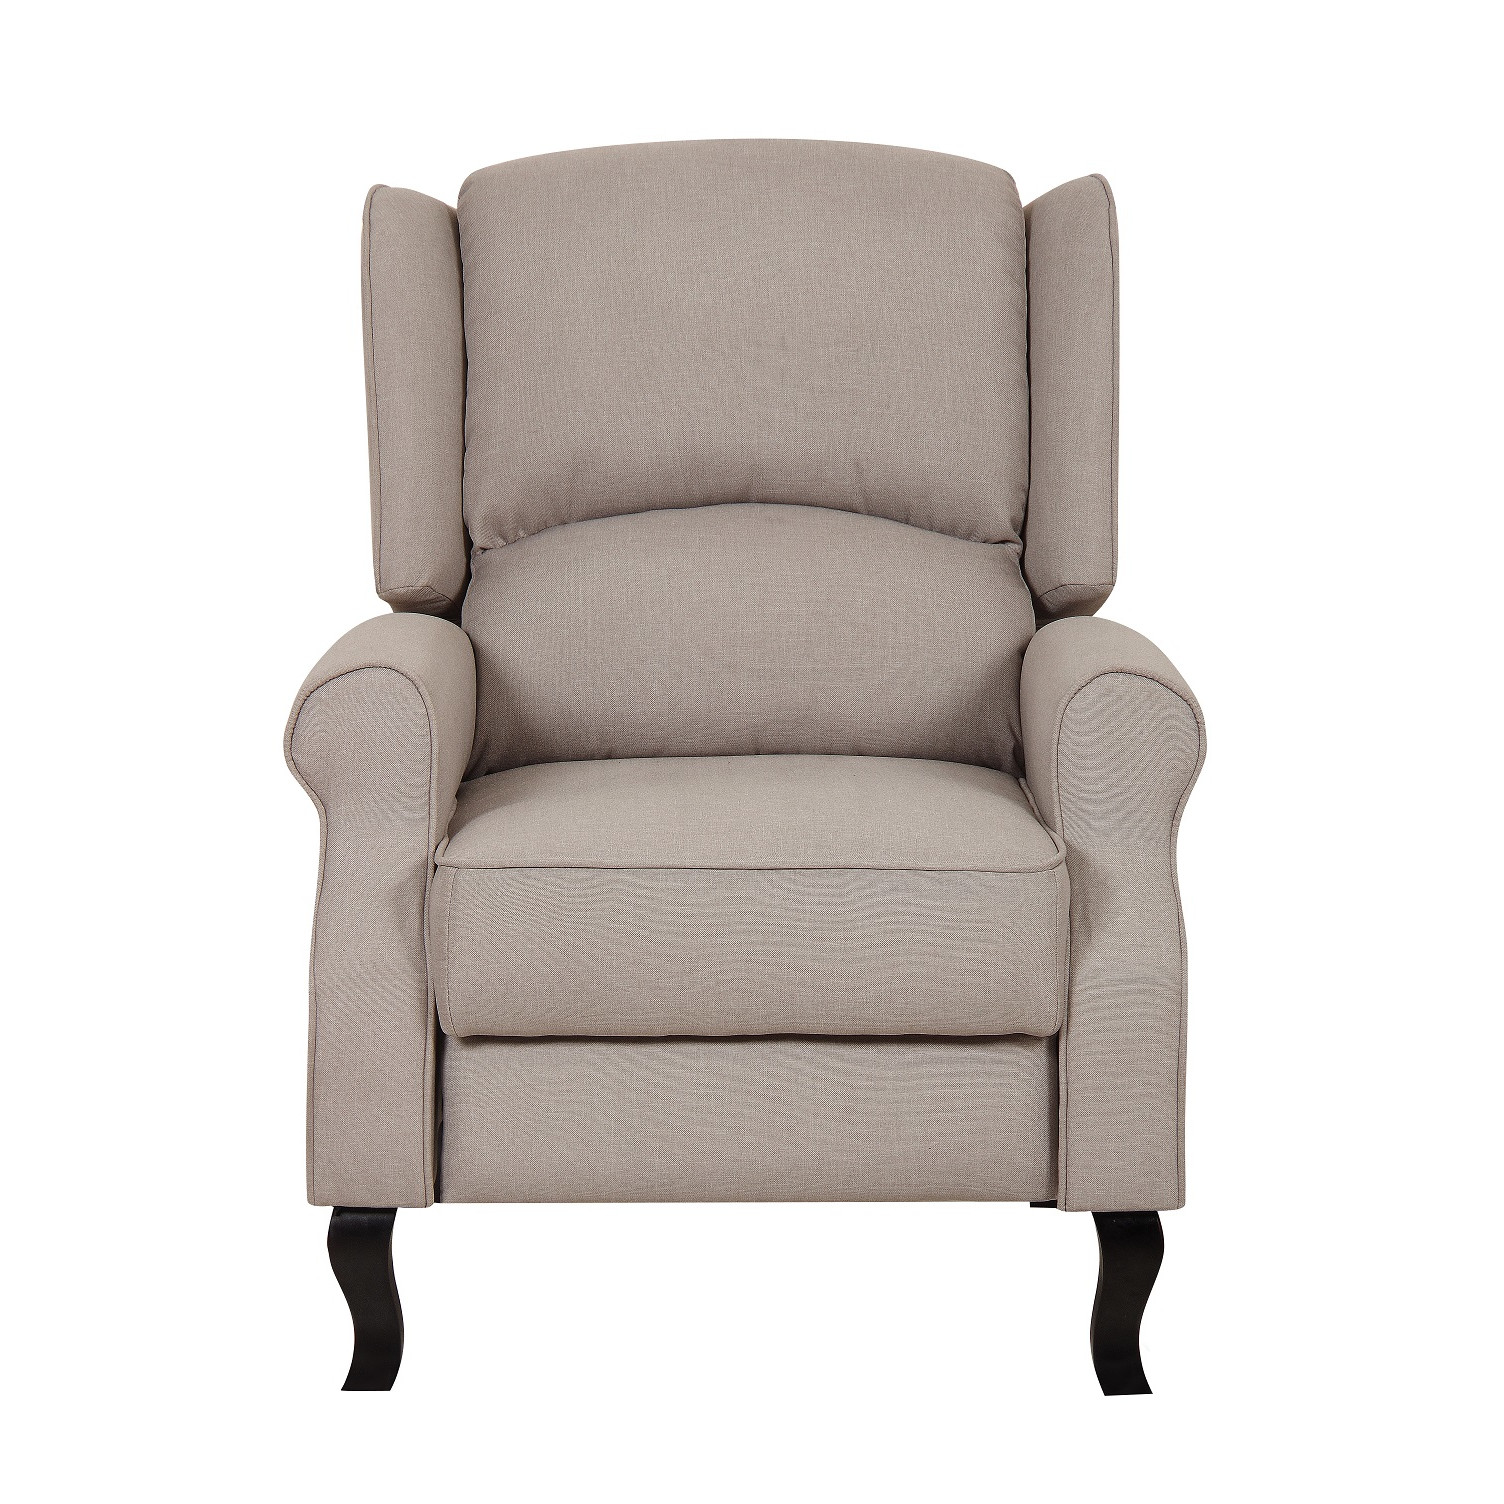 fabric recliner chair